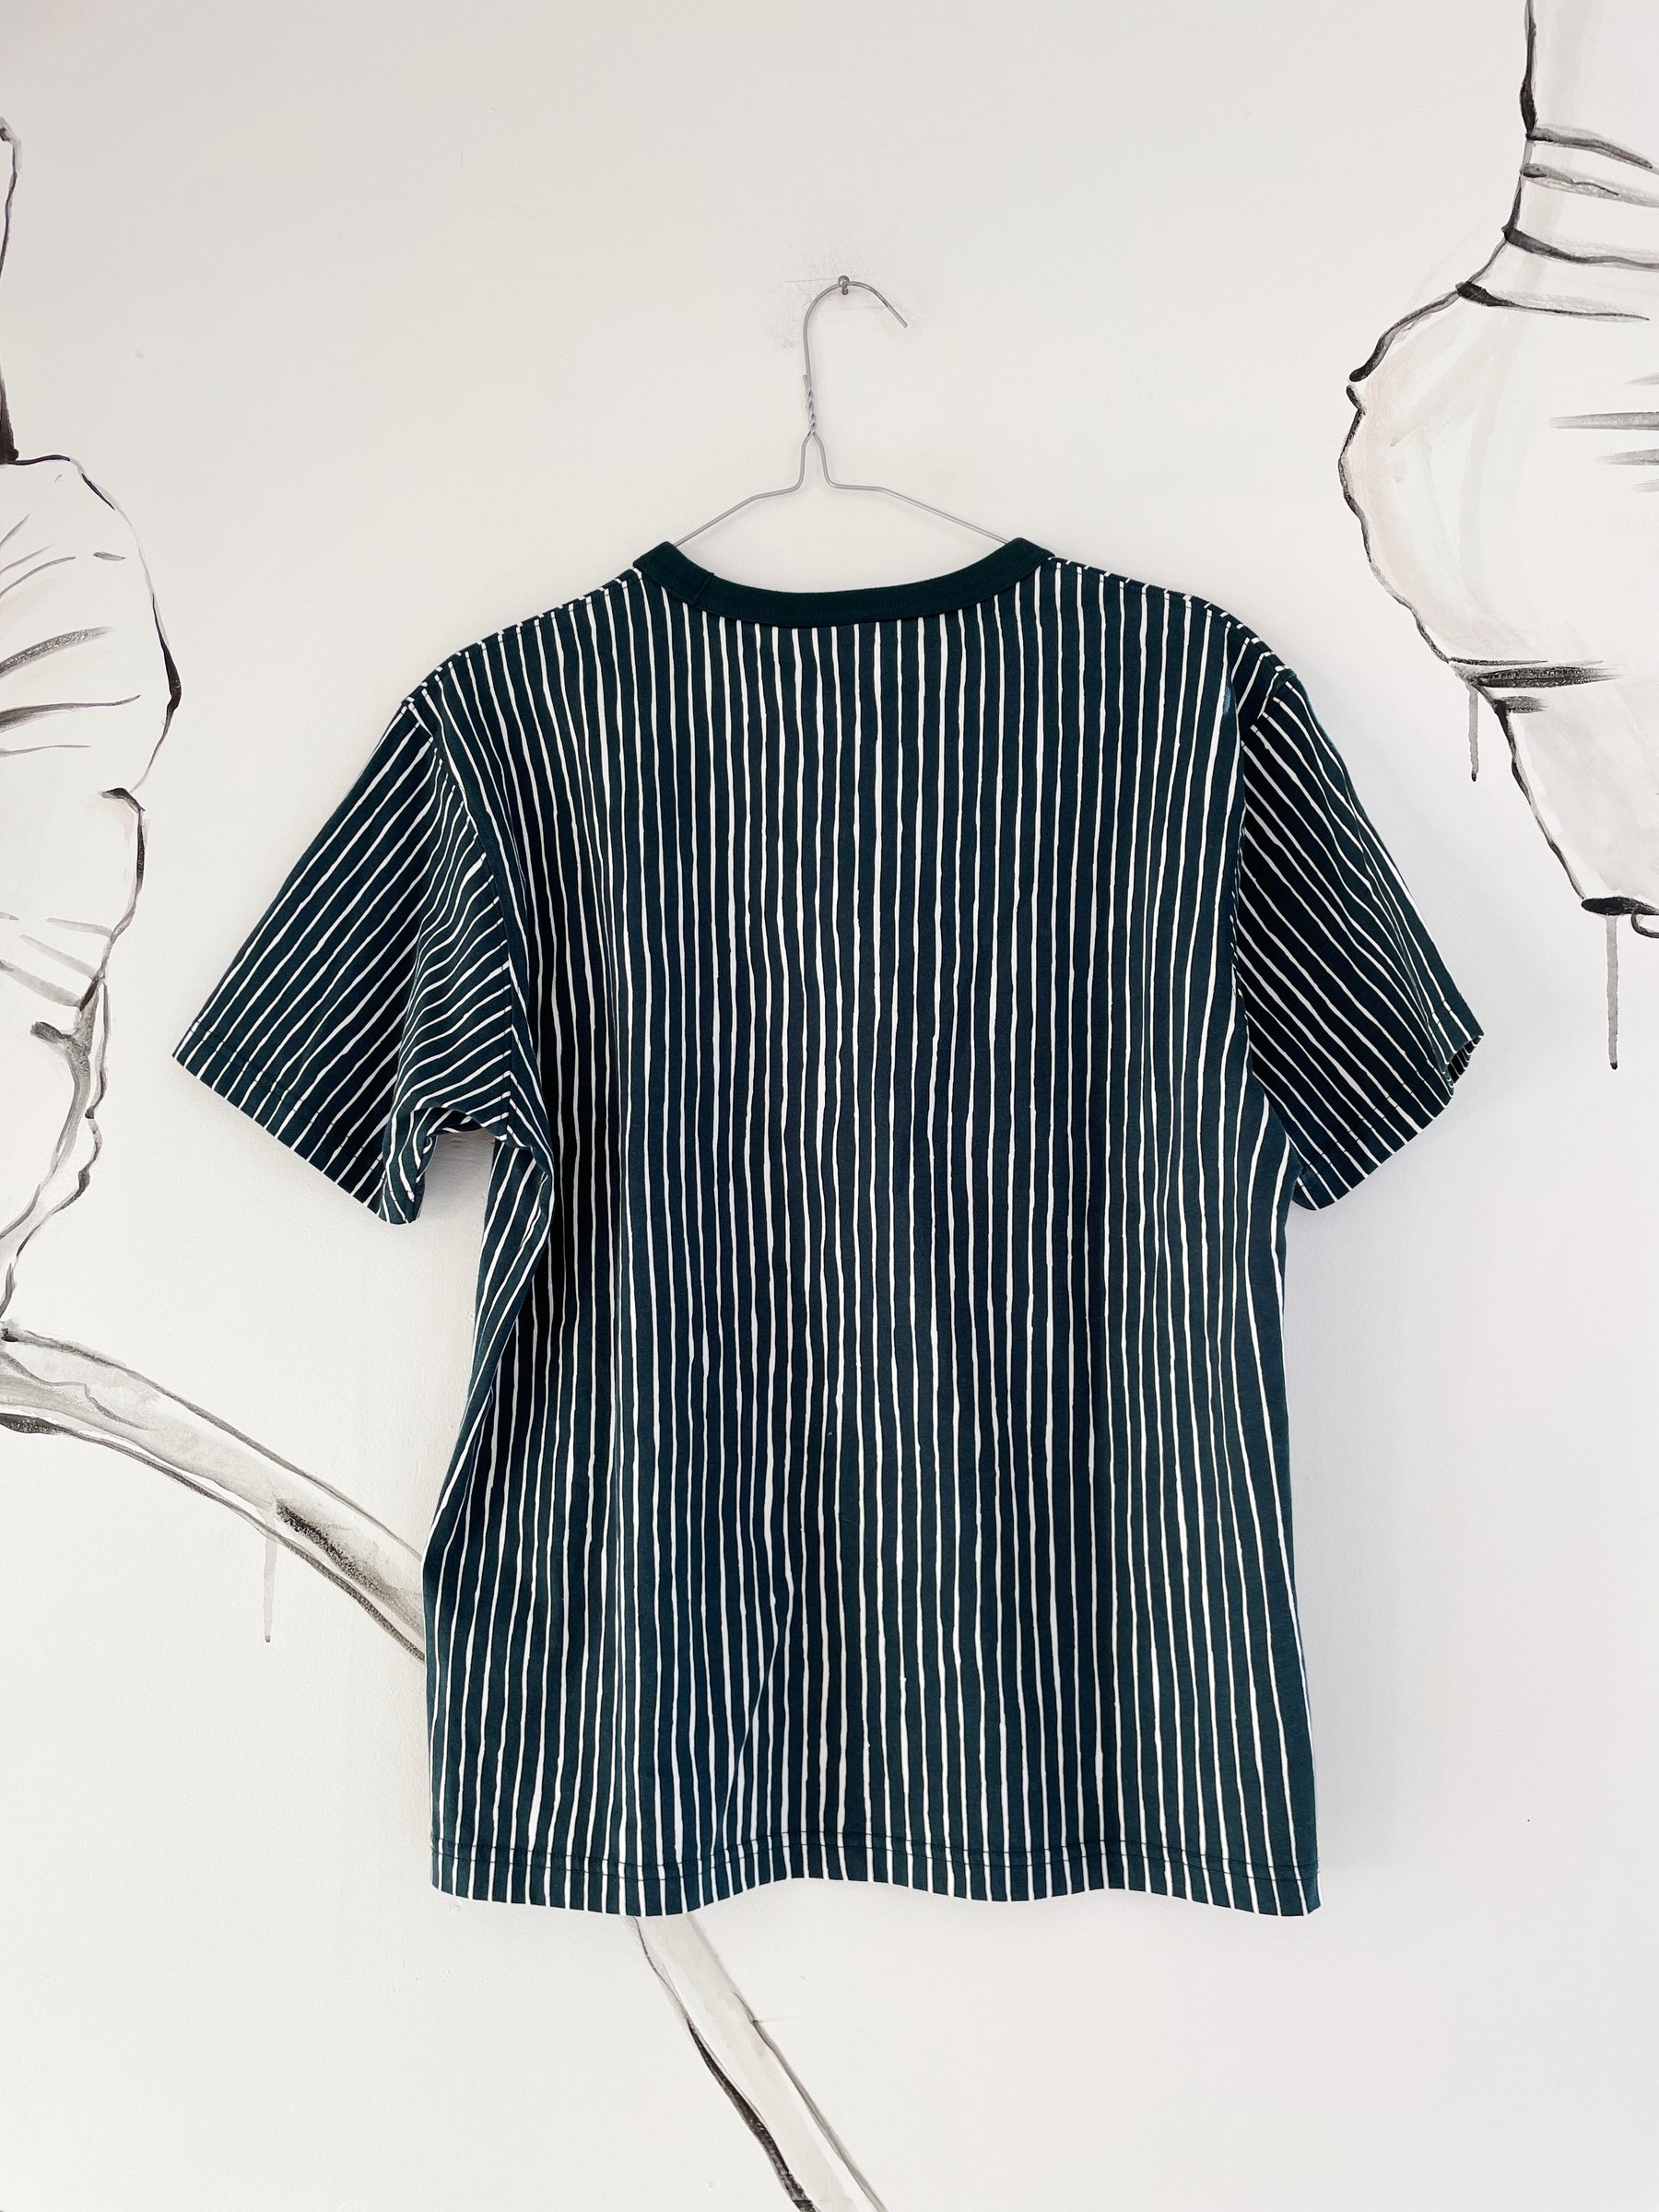 Marimekko x Uniqlo t-shirt